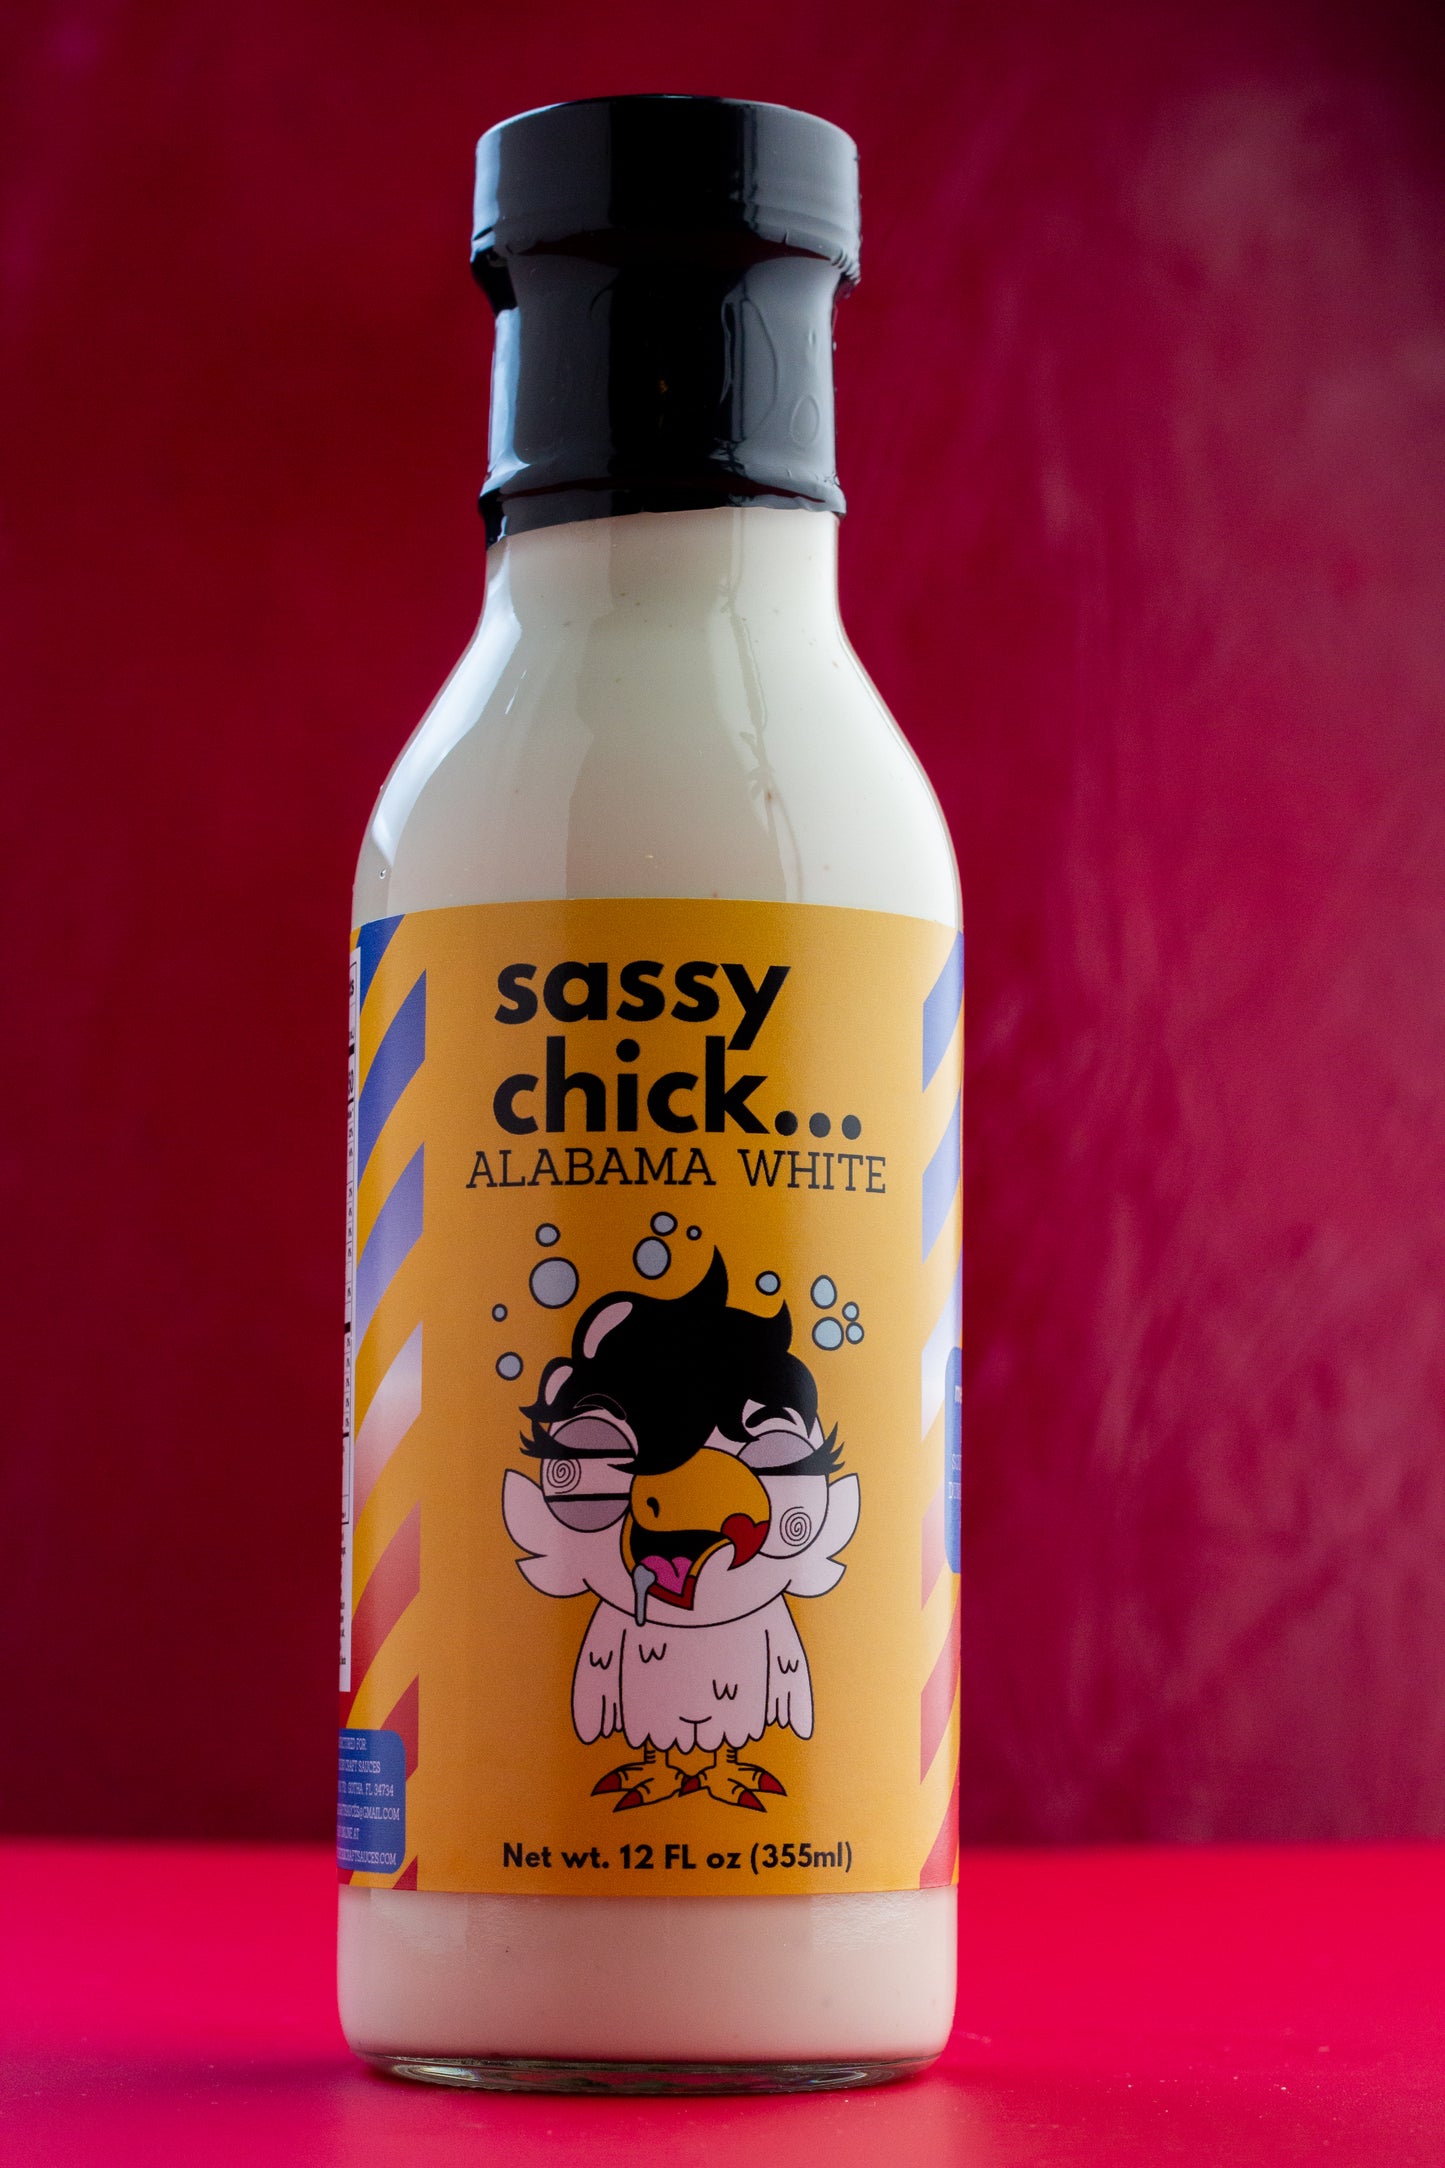 Sassy Chick... - Alabama White Sauce